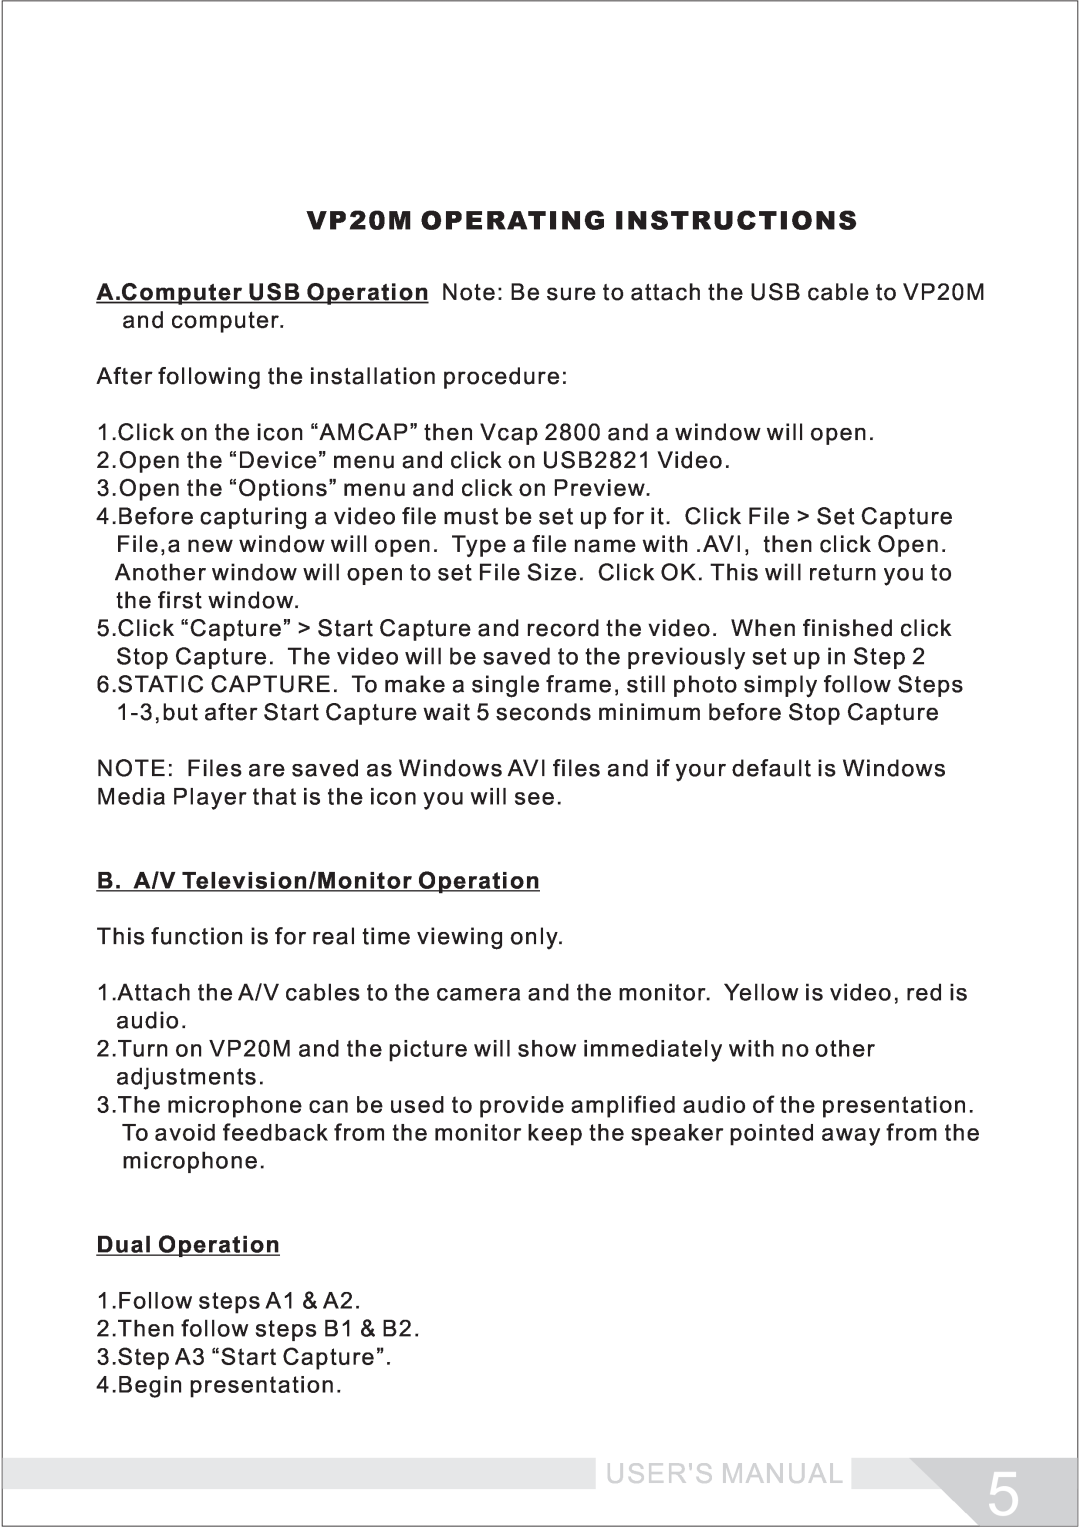 Buhl manual VP20M OPERATING INSTRUCTIONS, B. A/V Television/Monitor Operation, Dual Operation 